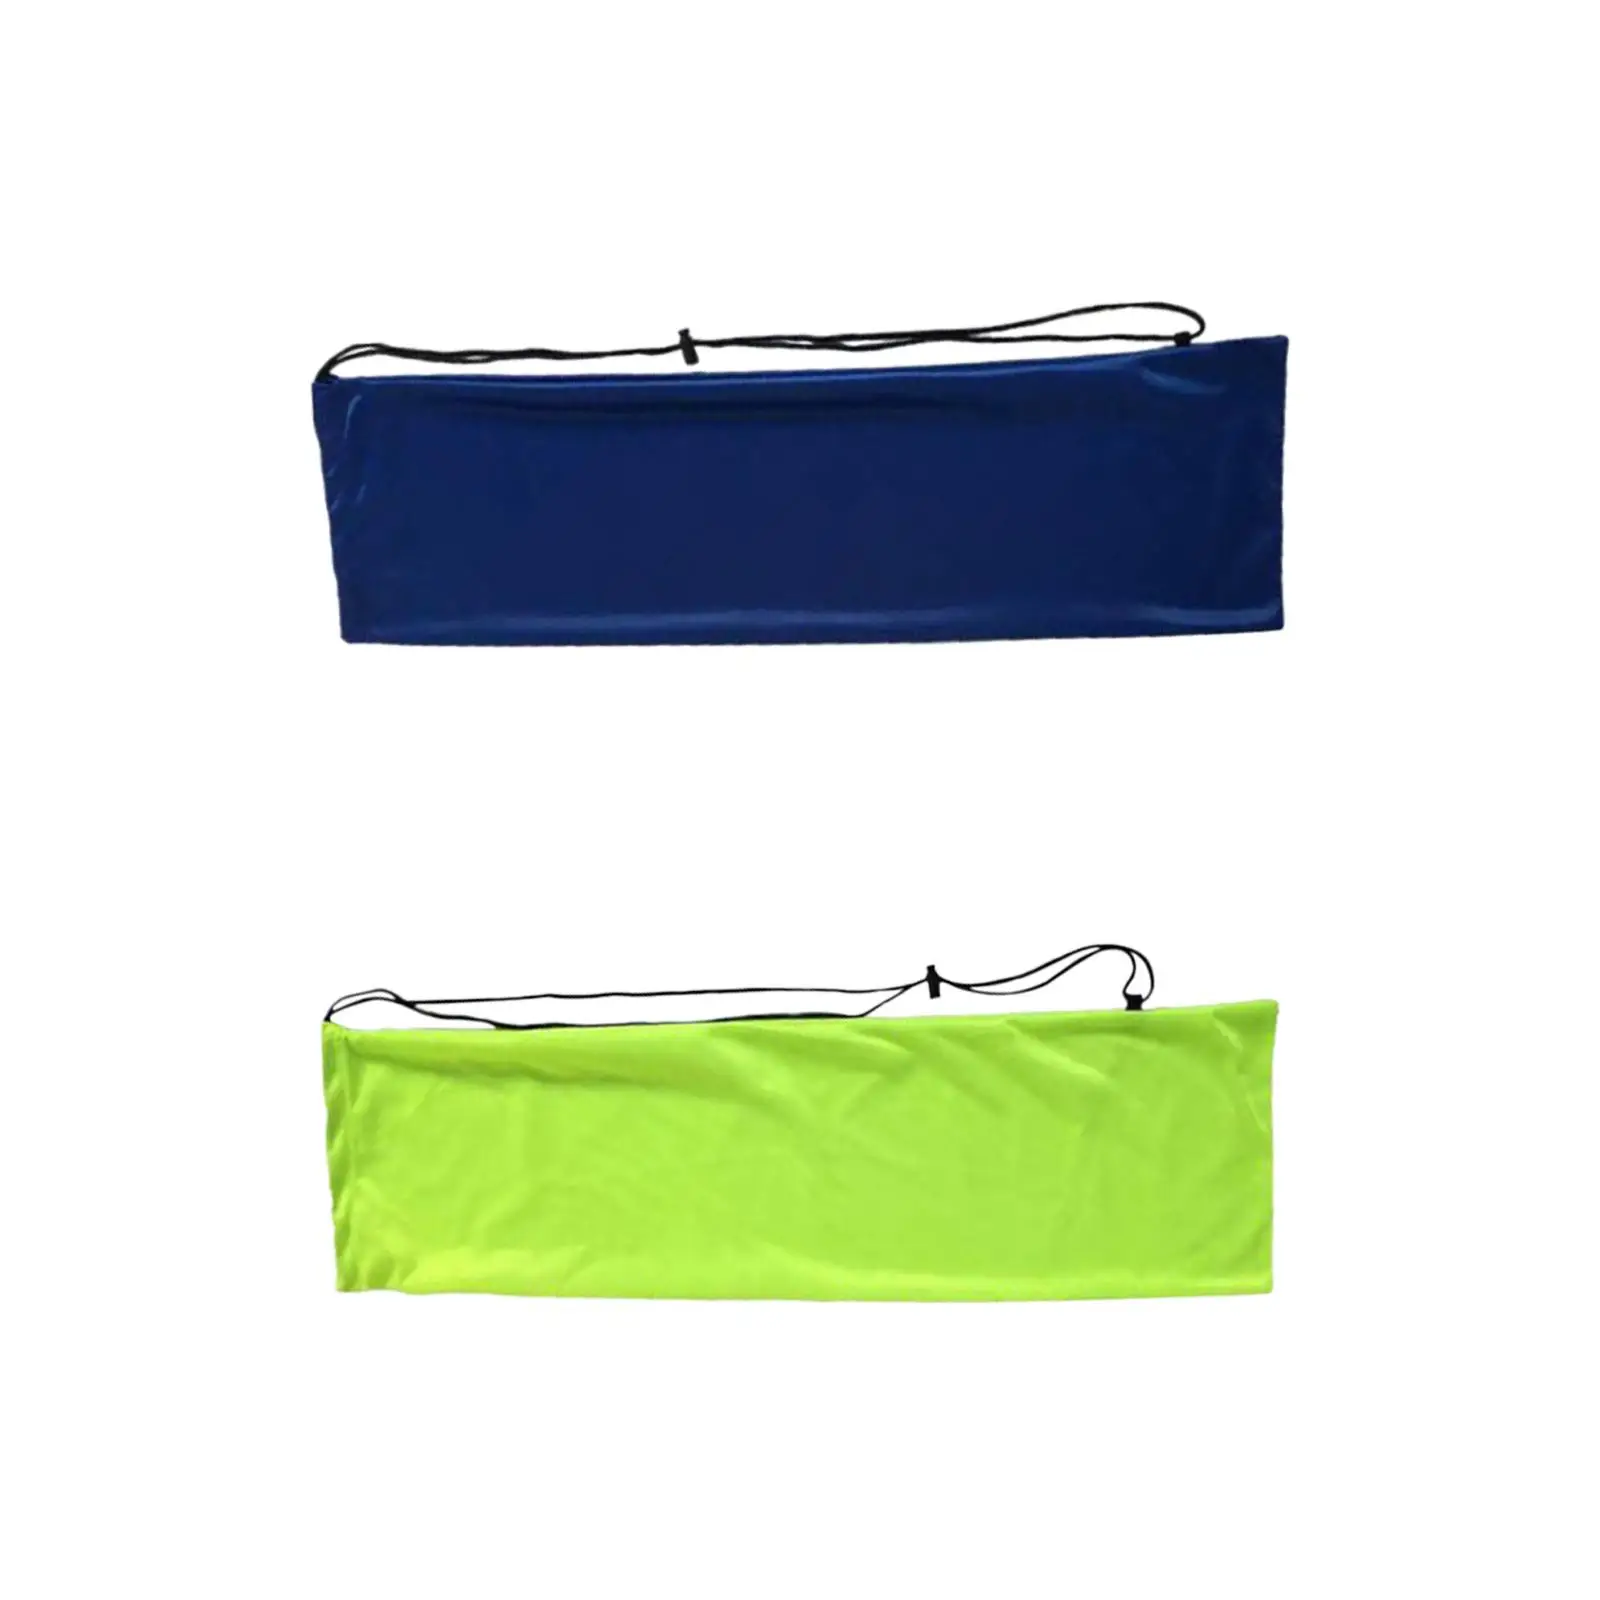 Badminton Racket Bag Soft Durable Dustproof Badminton Racquet Bag Carrier